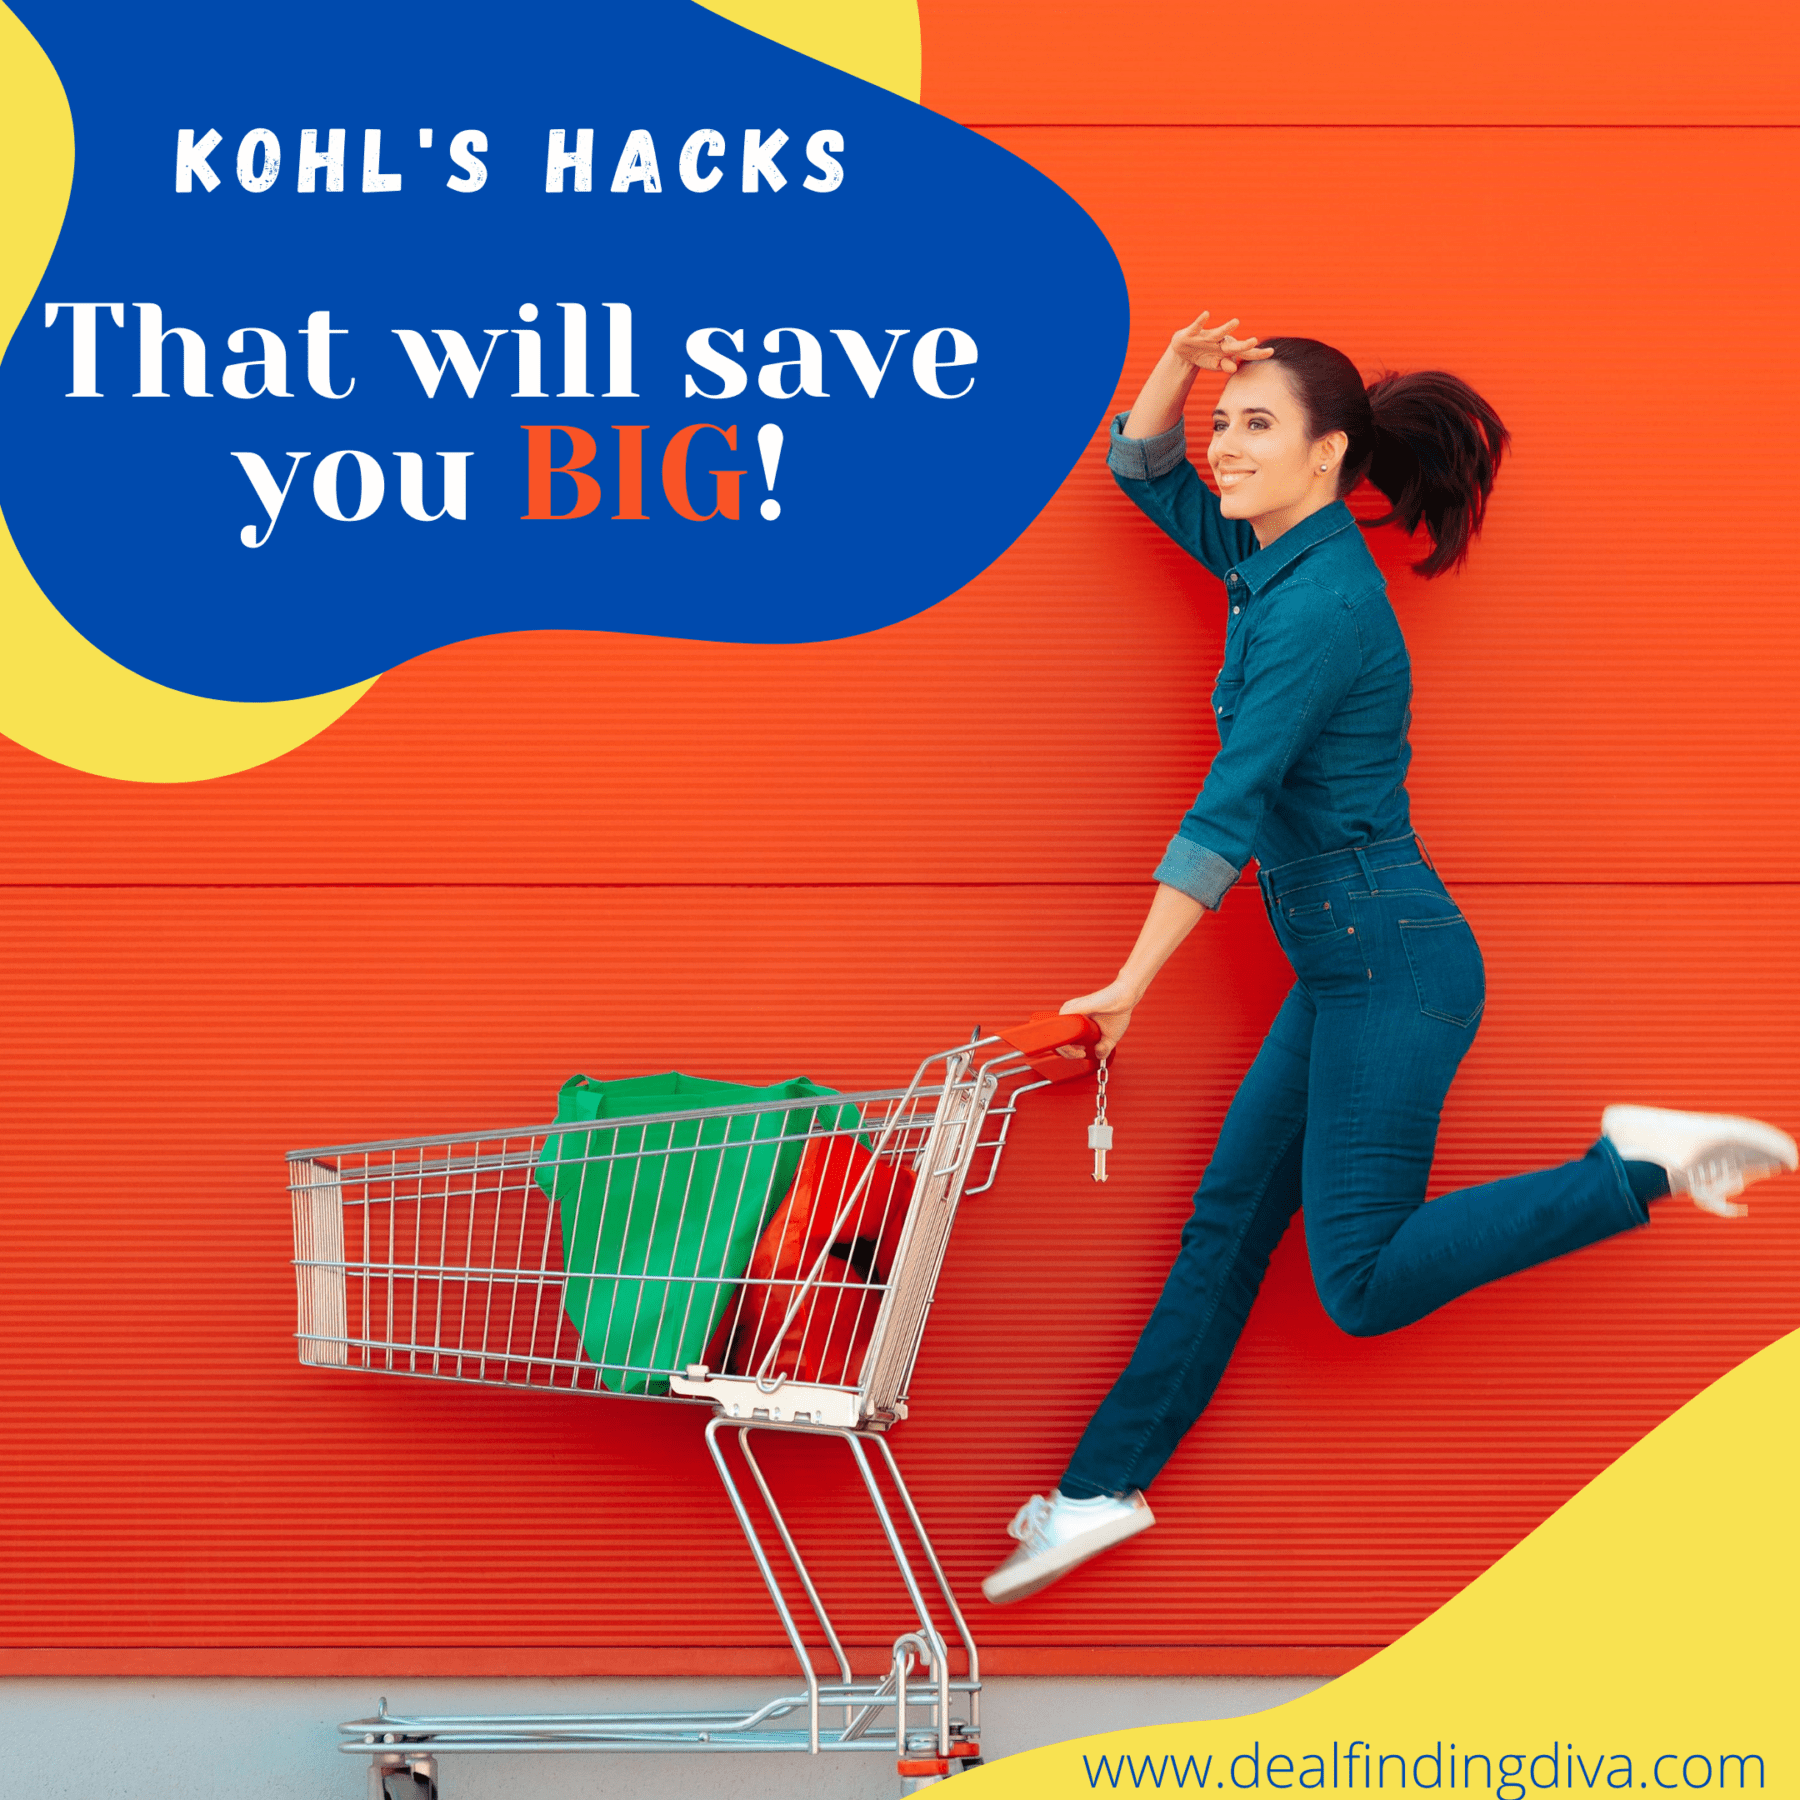 kohl's hacks coupon codes free shipping